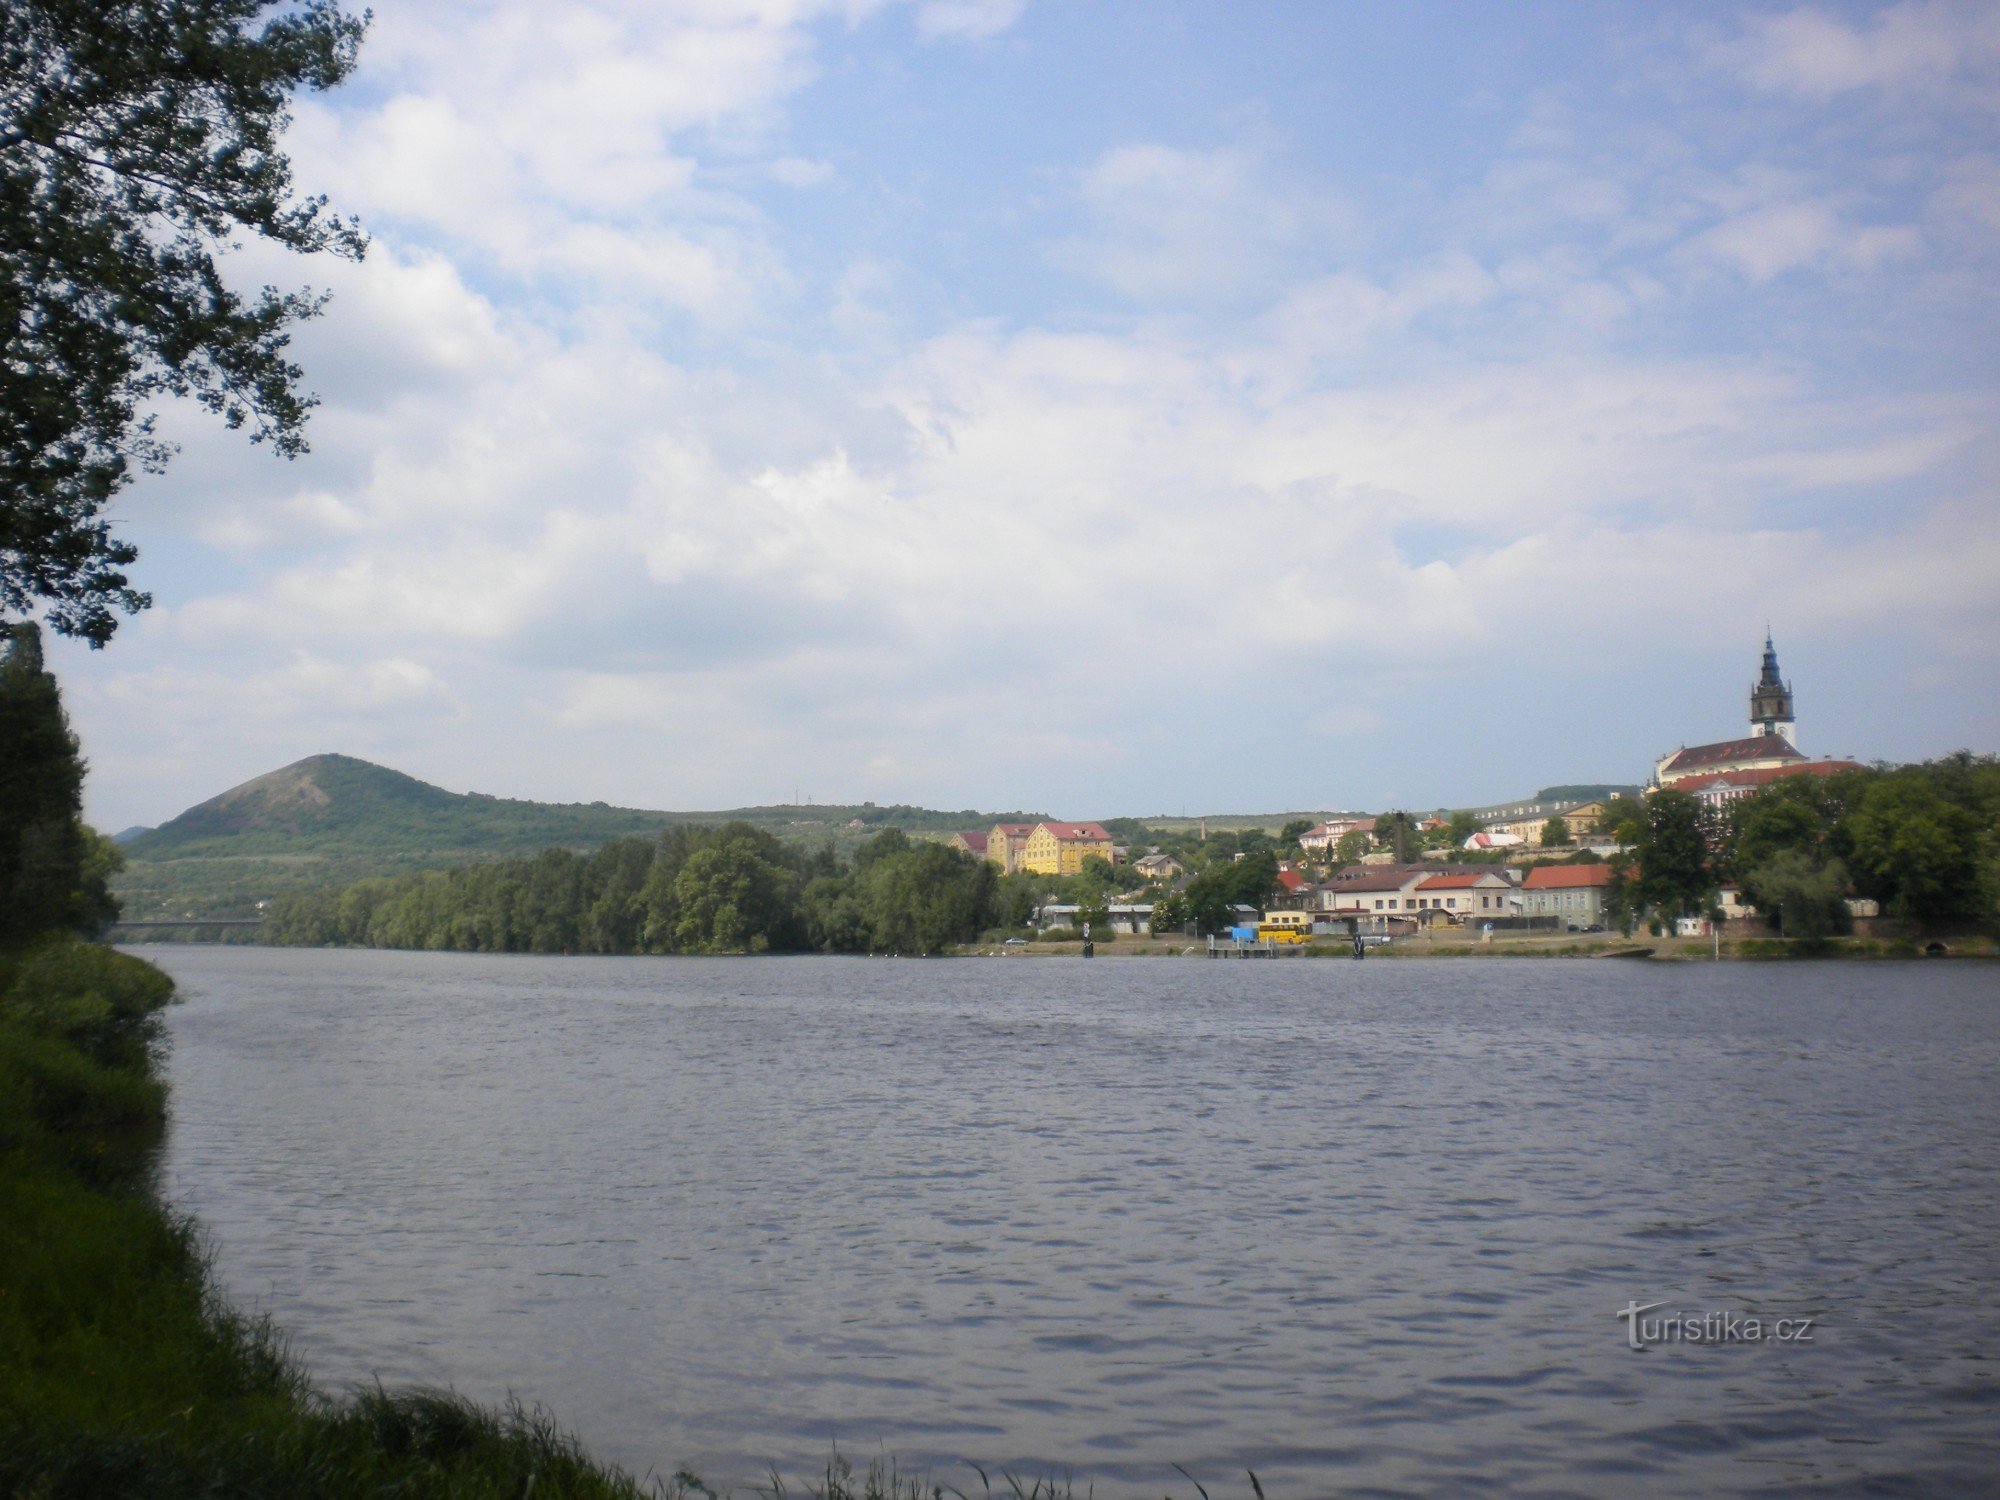 Vedere de la podul Tyrš peste Litoměřice și dealul Radobyl.